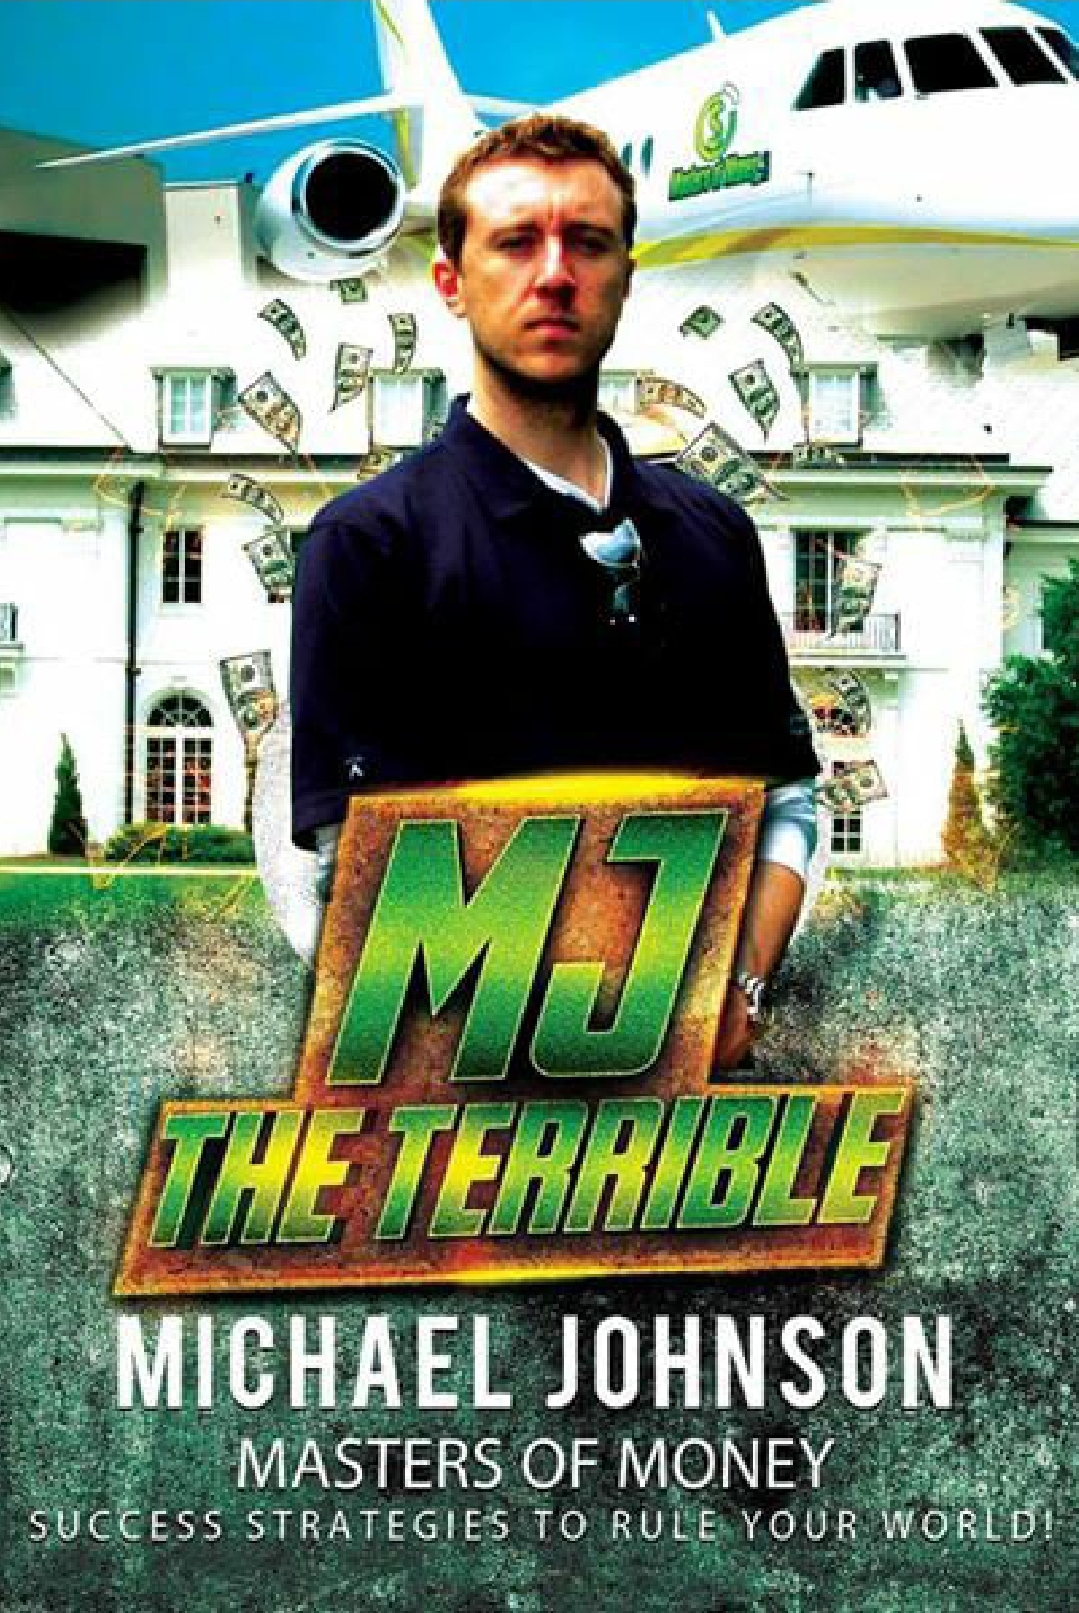 Michael "MJ The Terrible" Johnson Masters of Money LLC Success Poster